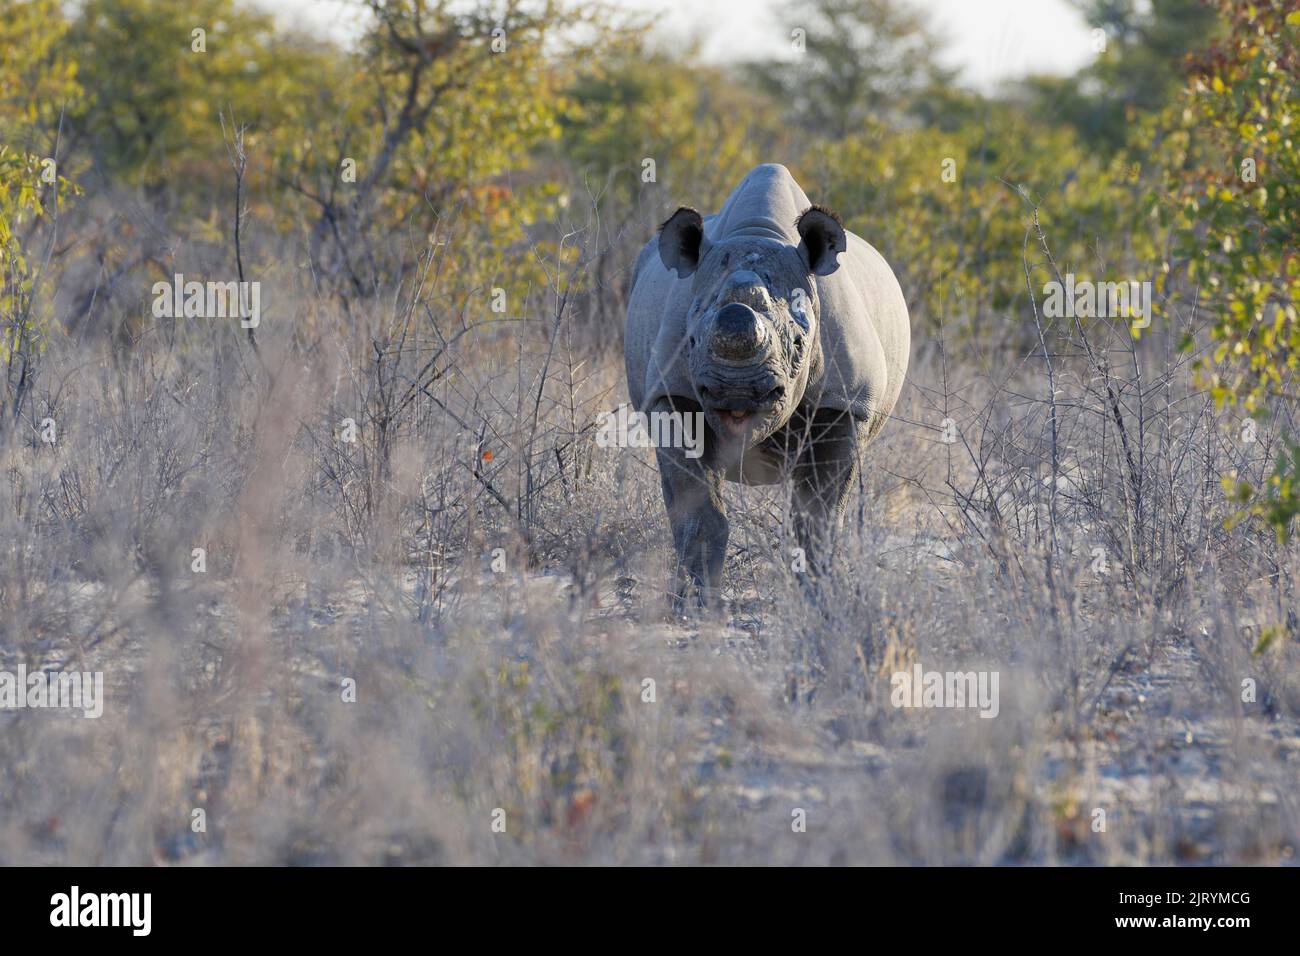 Black rhinoceros (Diceros bicornis) with sawed off horns, anti-poaching measure, adult foraging, Etosha National Park, Namibia, Africa Stock Photo